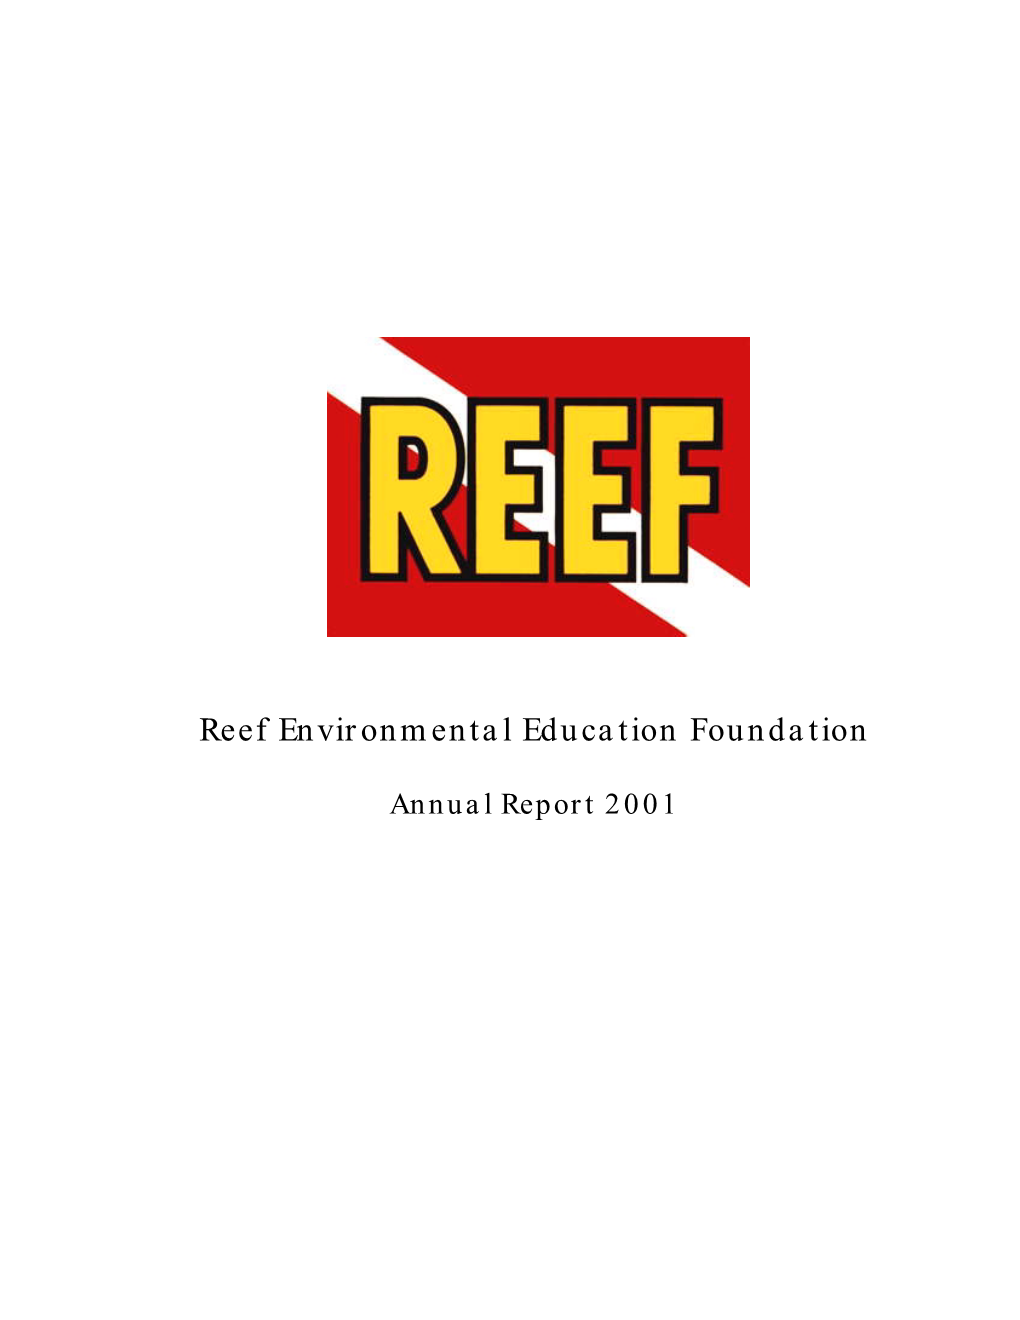 2001 Reef Environmental Education Foundation